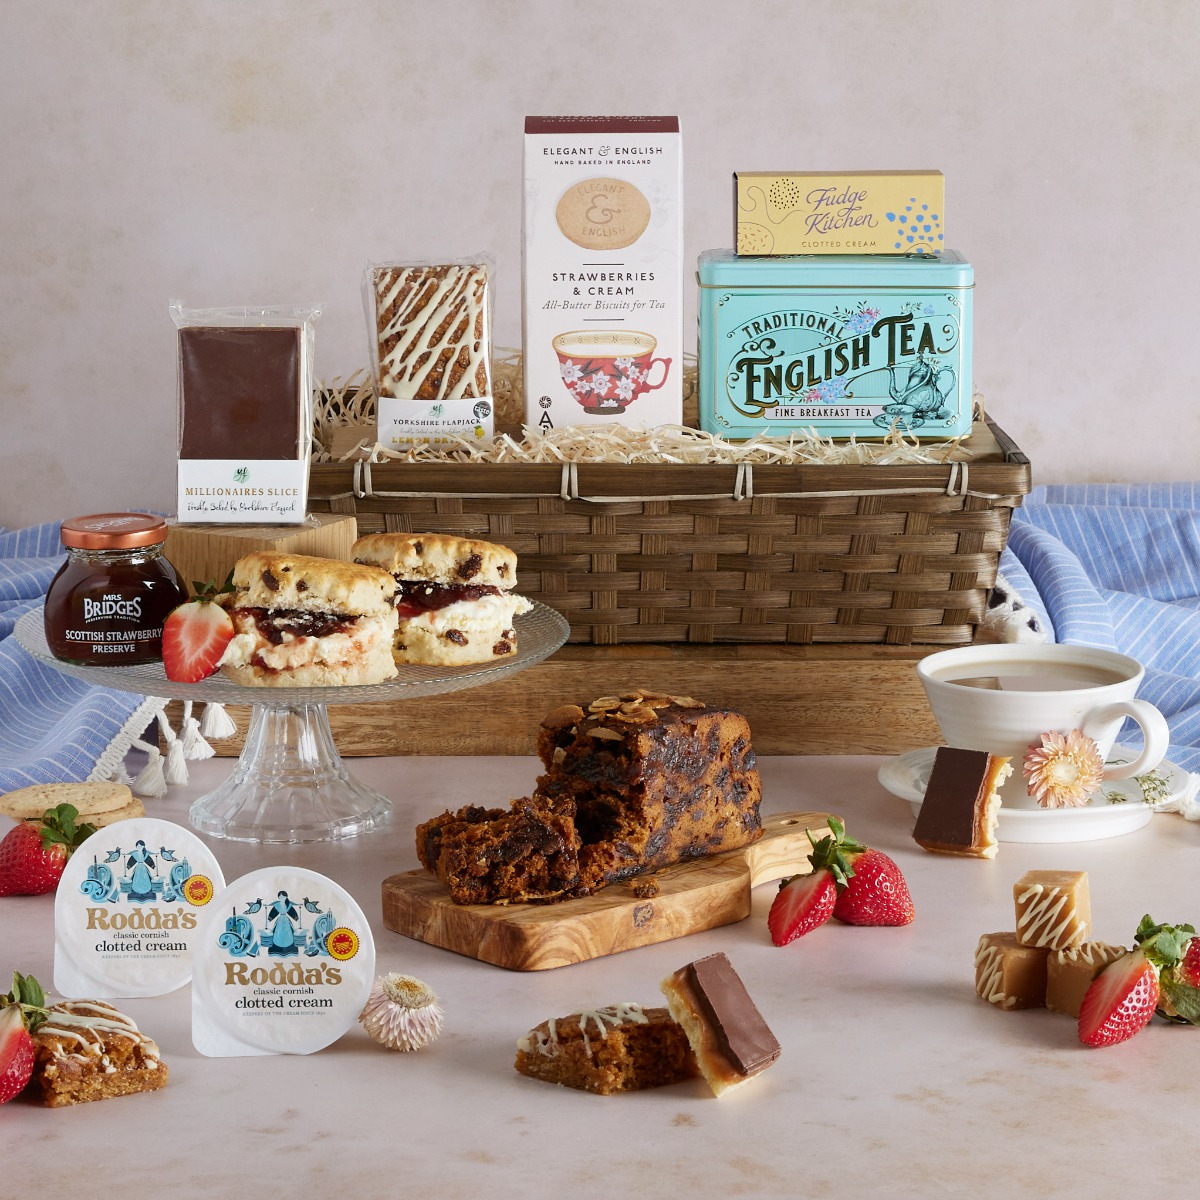 Luxury Cream Tea Gift Hamper Afternoon Tea Basket with Traditional Scones, Cake, Biscuits Hampers.com